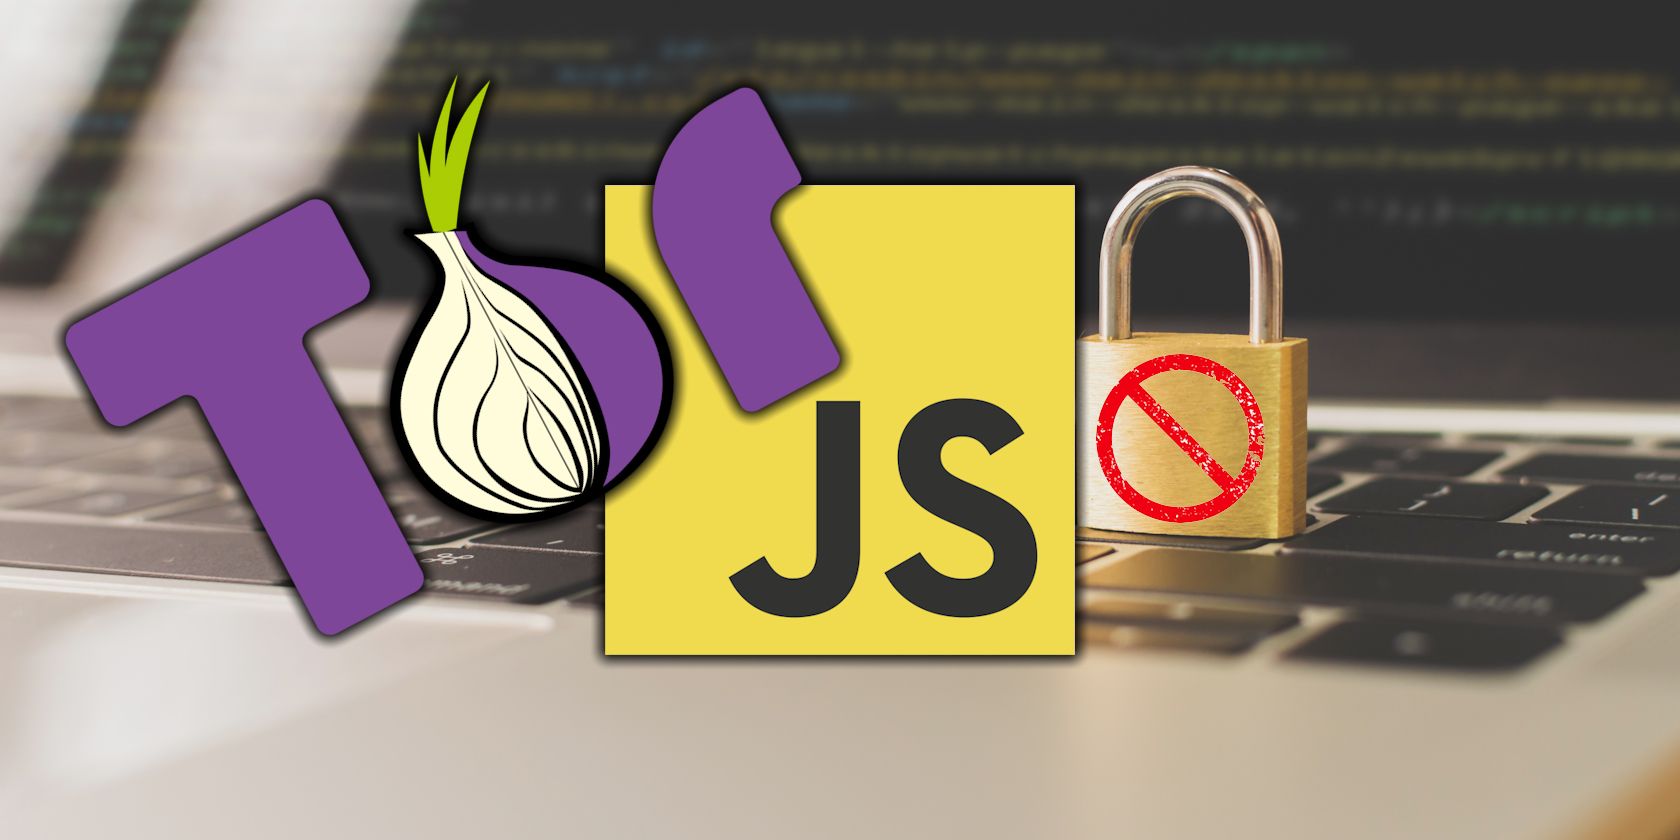 tor browser javascript logos on padlock security background